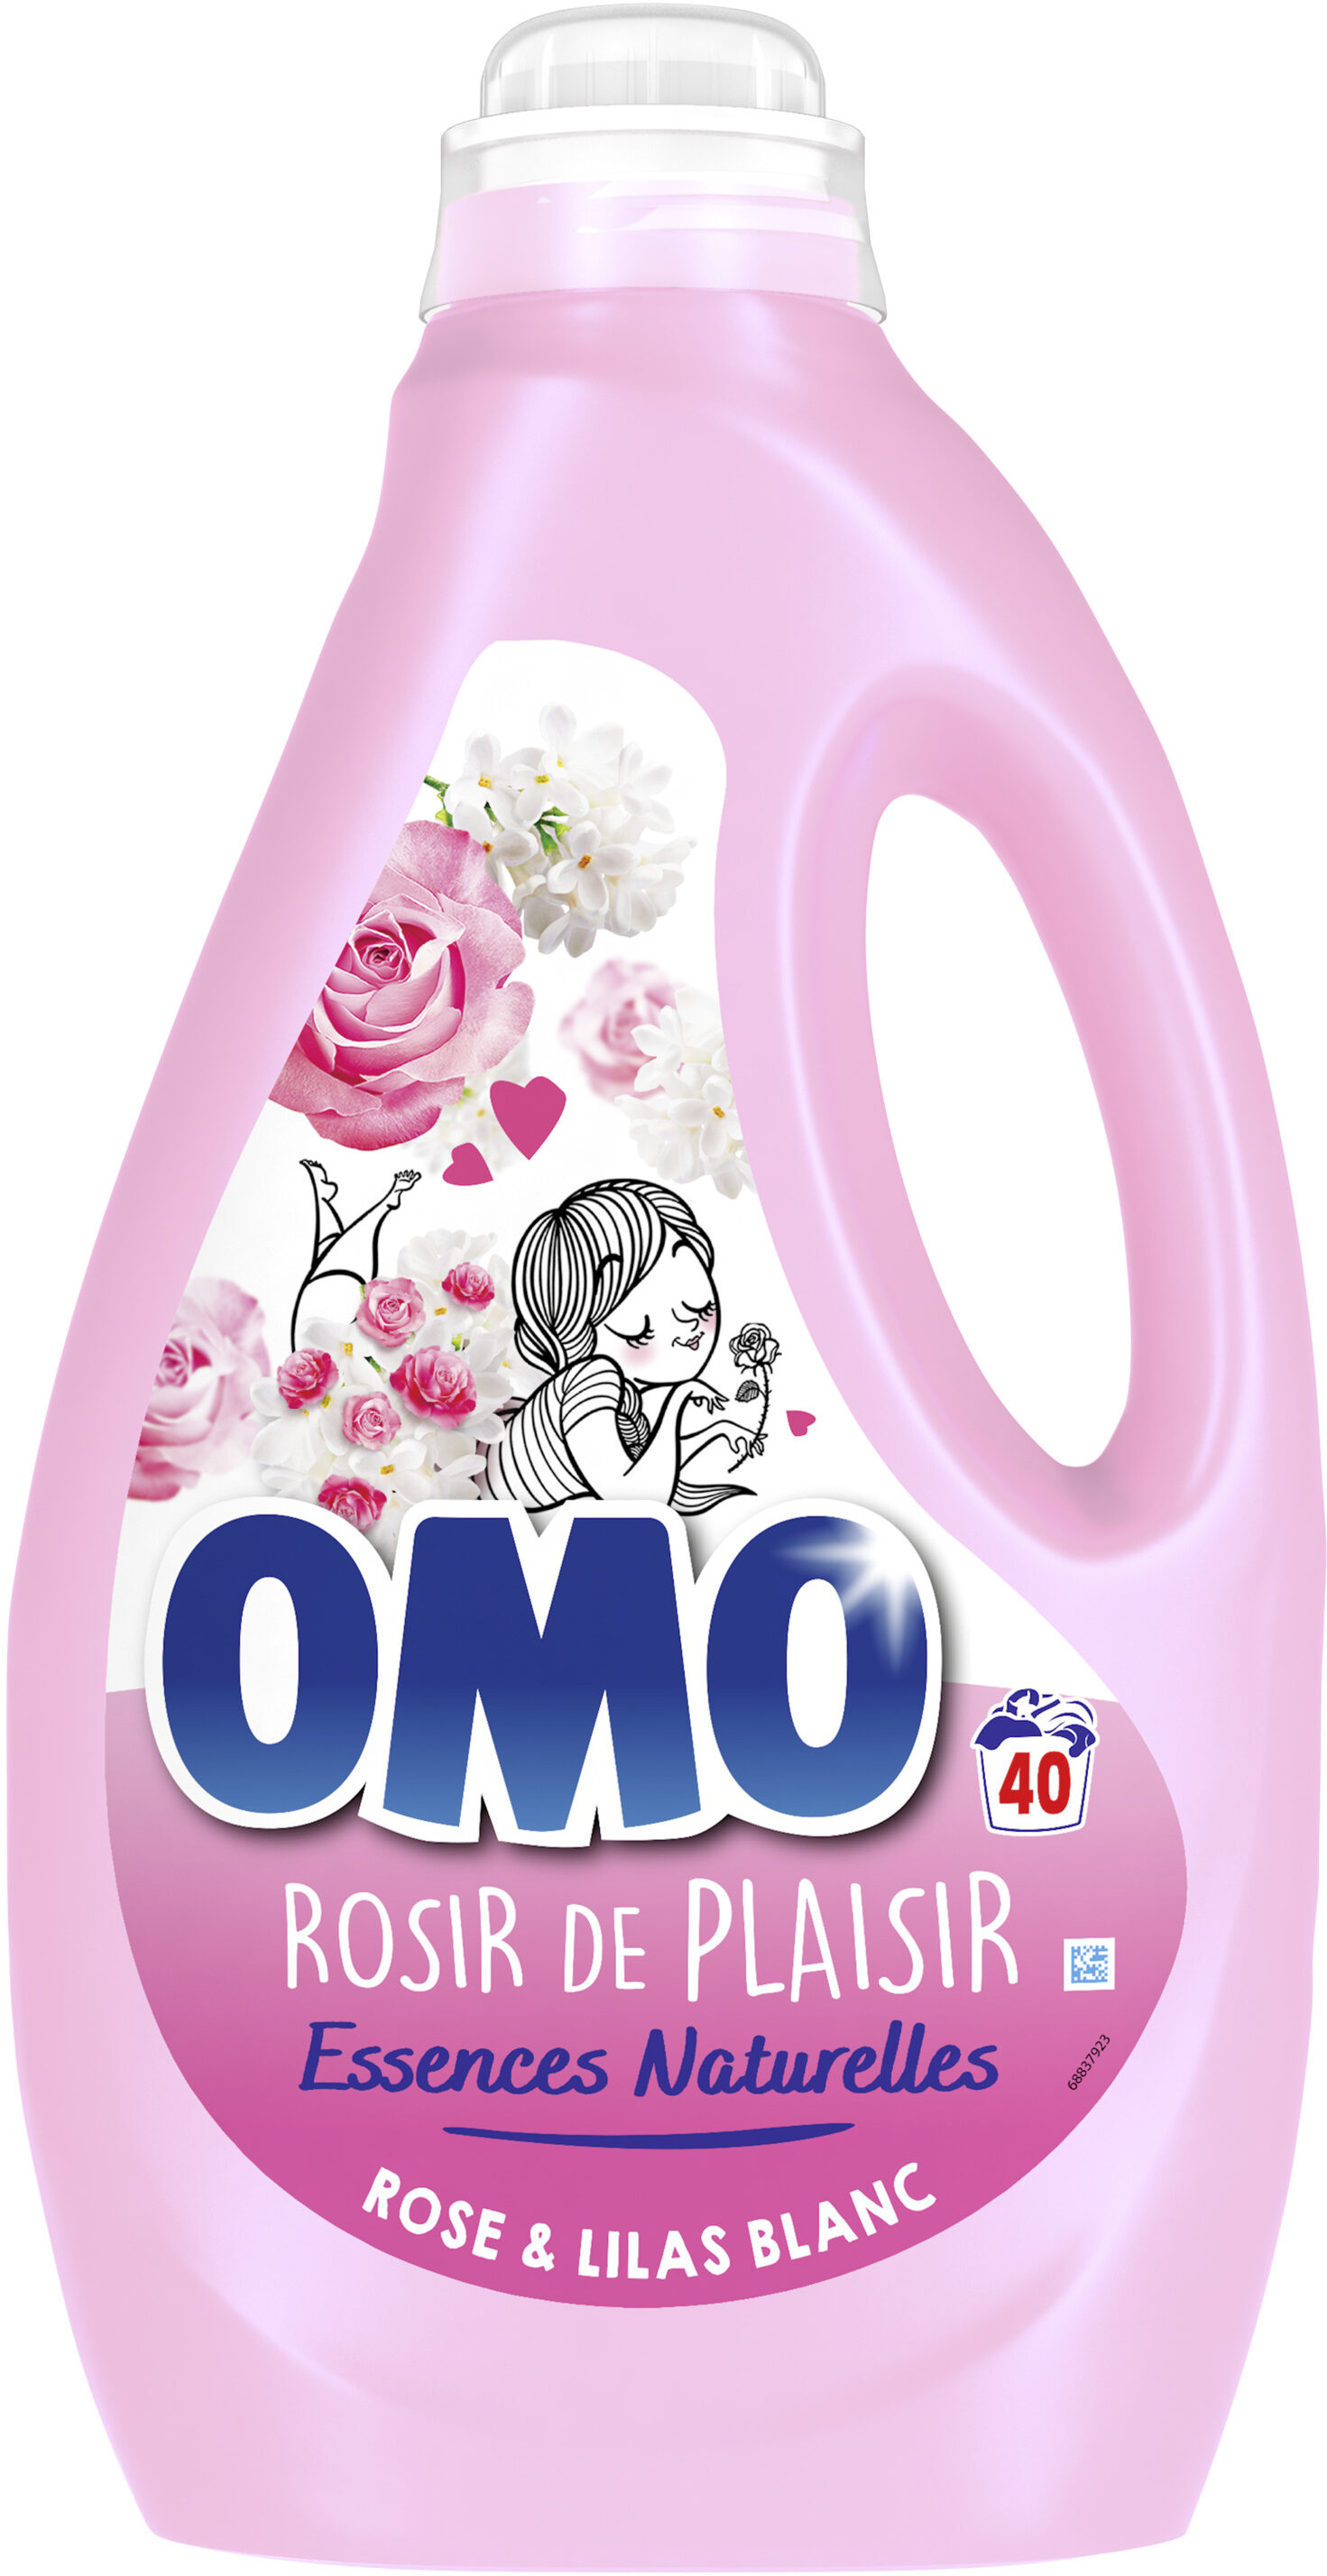 Omo Lessive Liquide Rose & Lilas Blanc 2l 40 Lavages - Product - fr